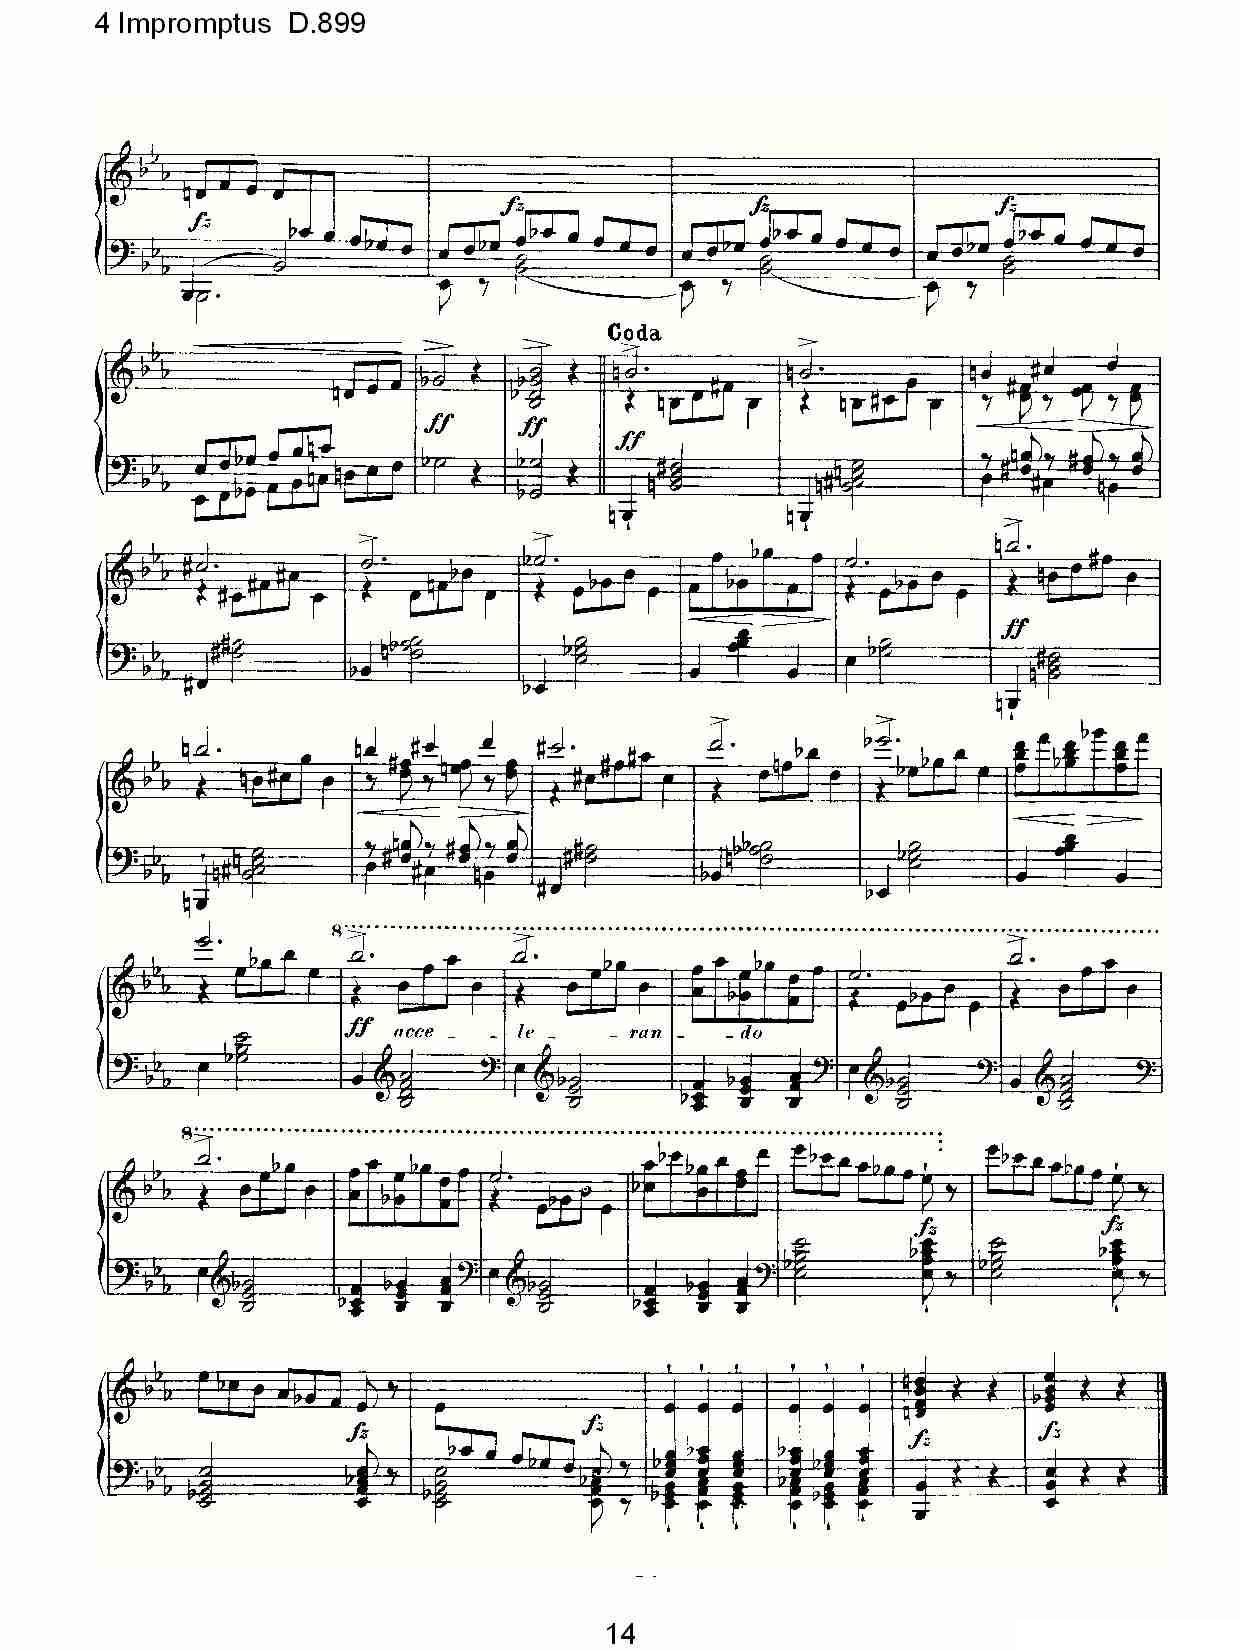 4 Impromptus D.899（4人即兴演奏 D.899）钢琴曲谱（图14）